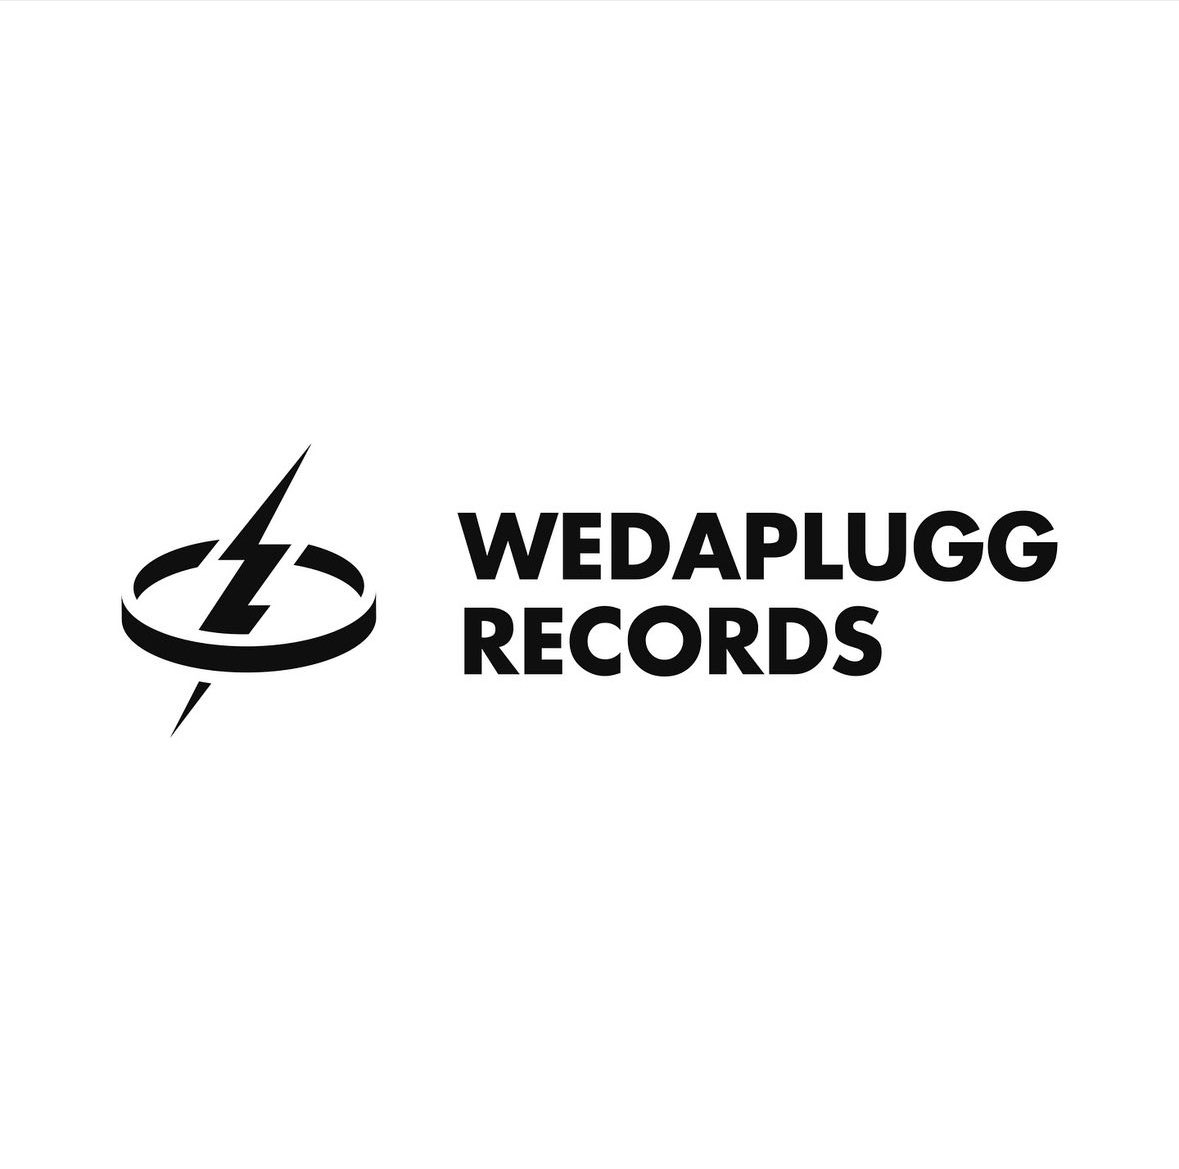 #wedaplugg が正式にレーベル解散を発表。
2018年から始動し、2024年5月まで、約6年間活動した。

#aparchemy #imjmwdp